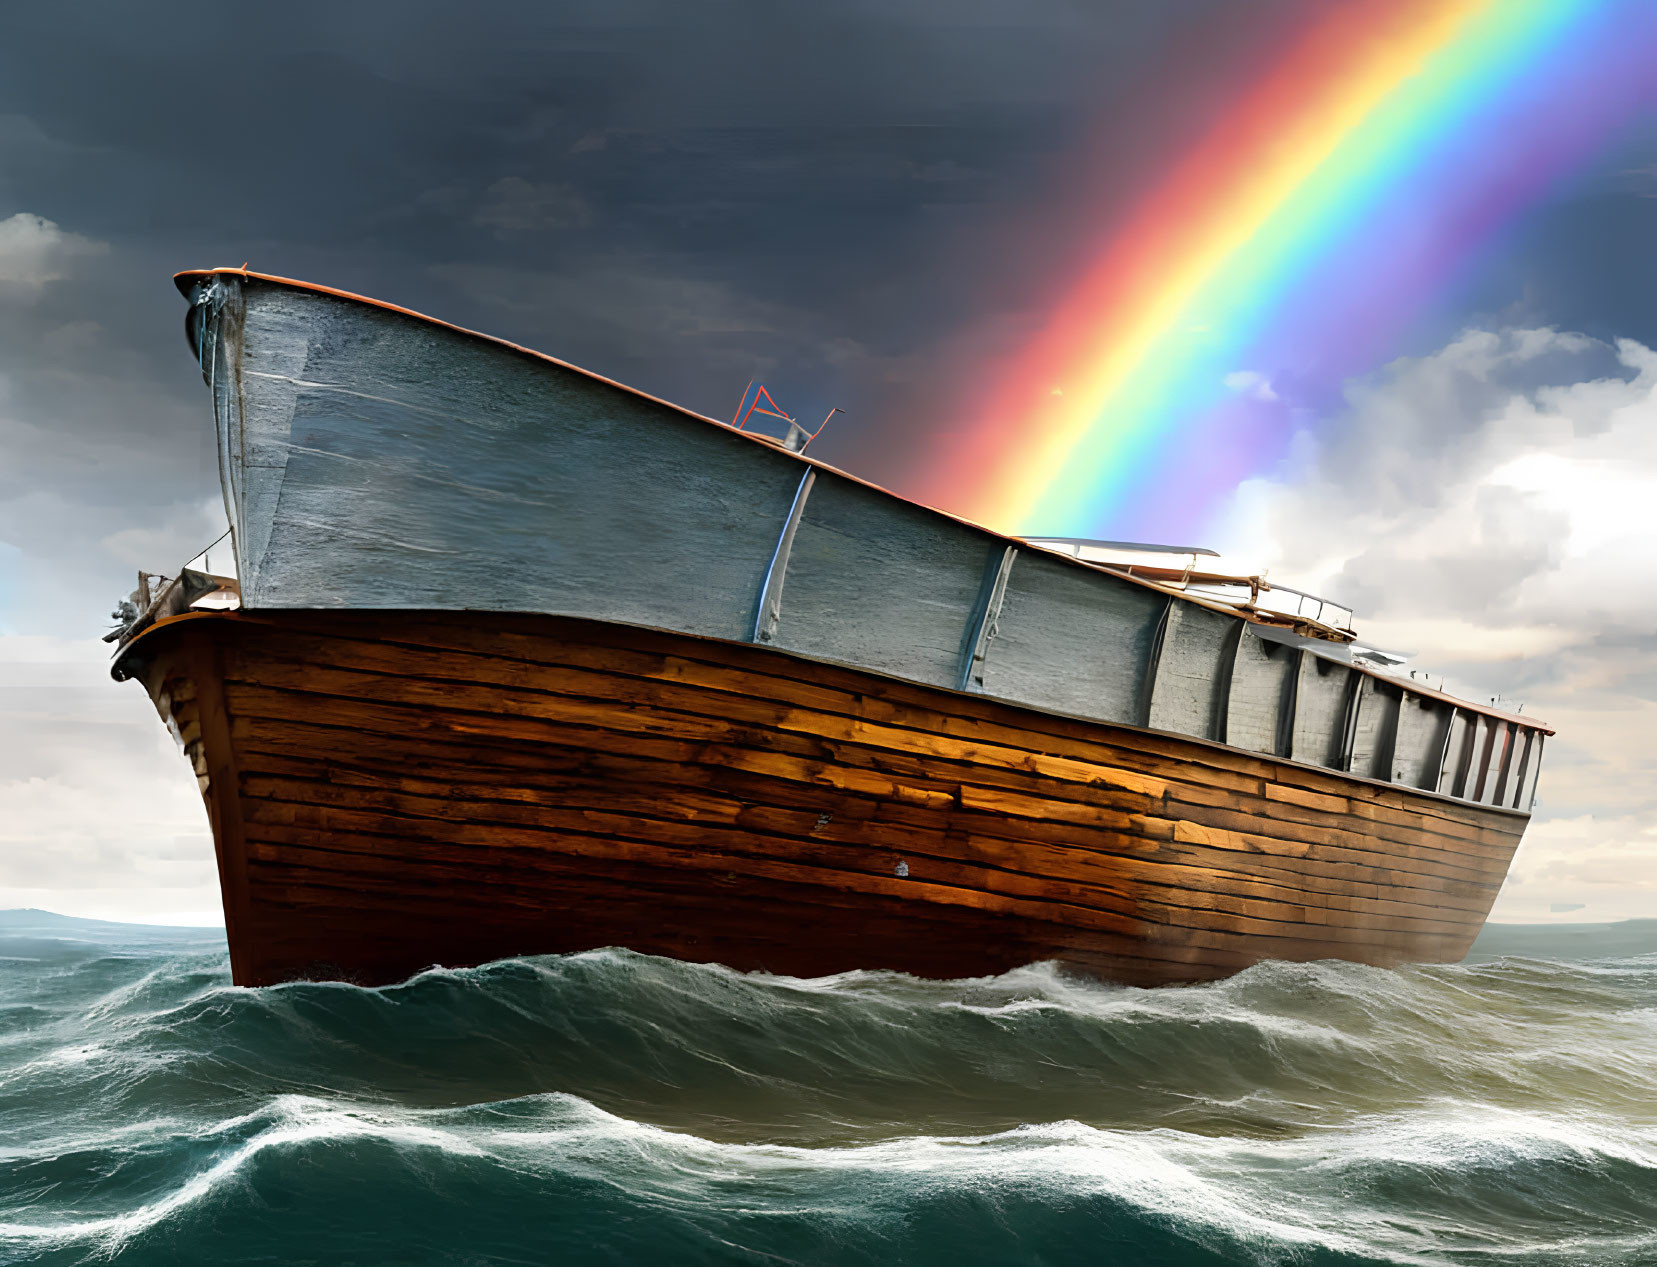 Wooden boat on choppy seas with vivid rainbow under stormy sky